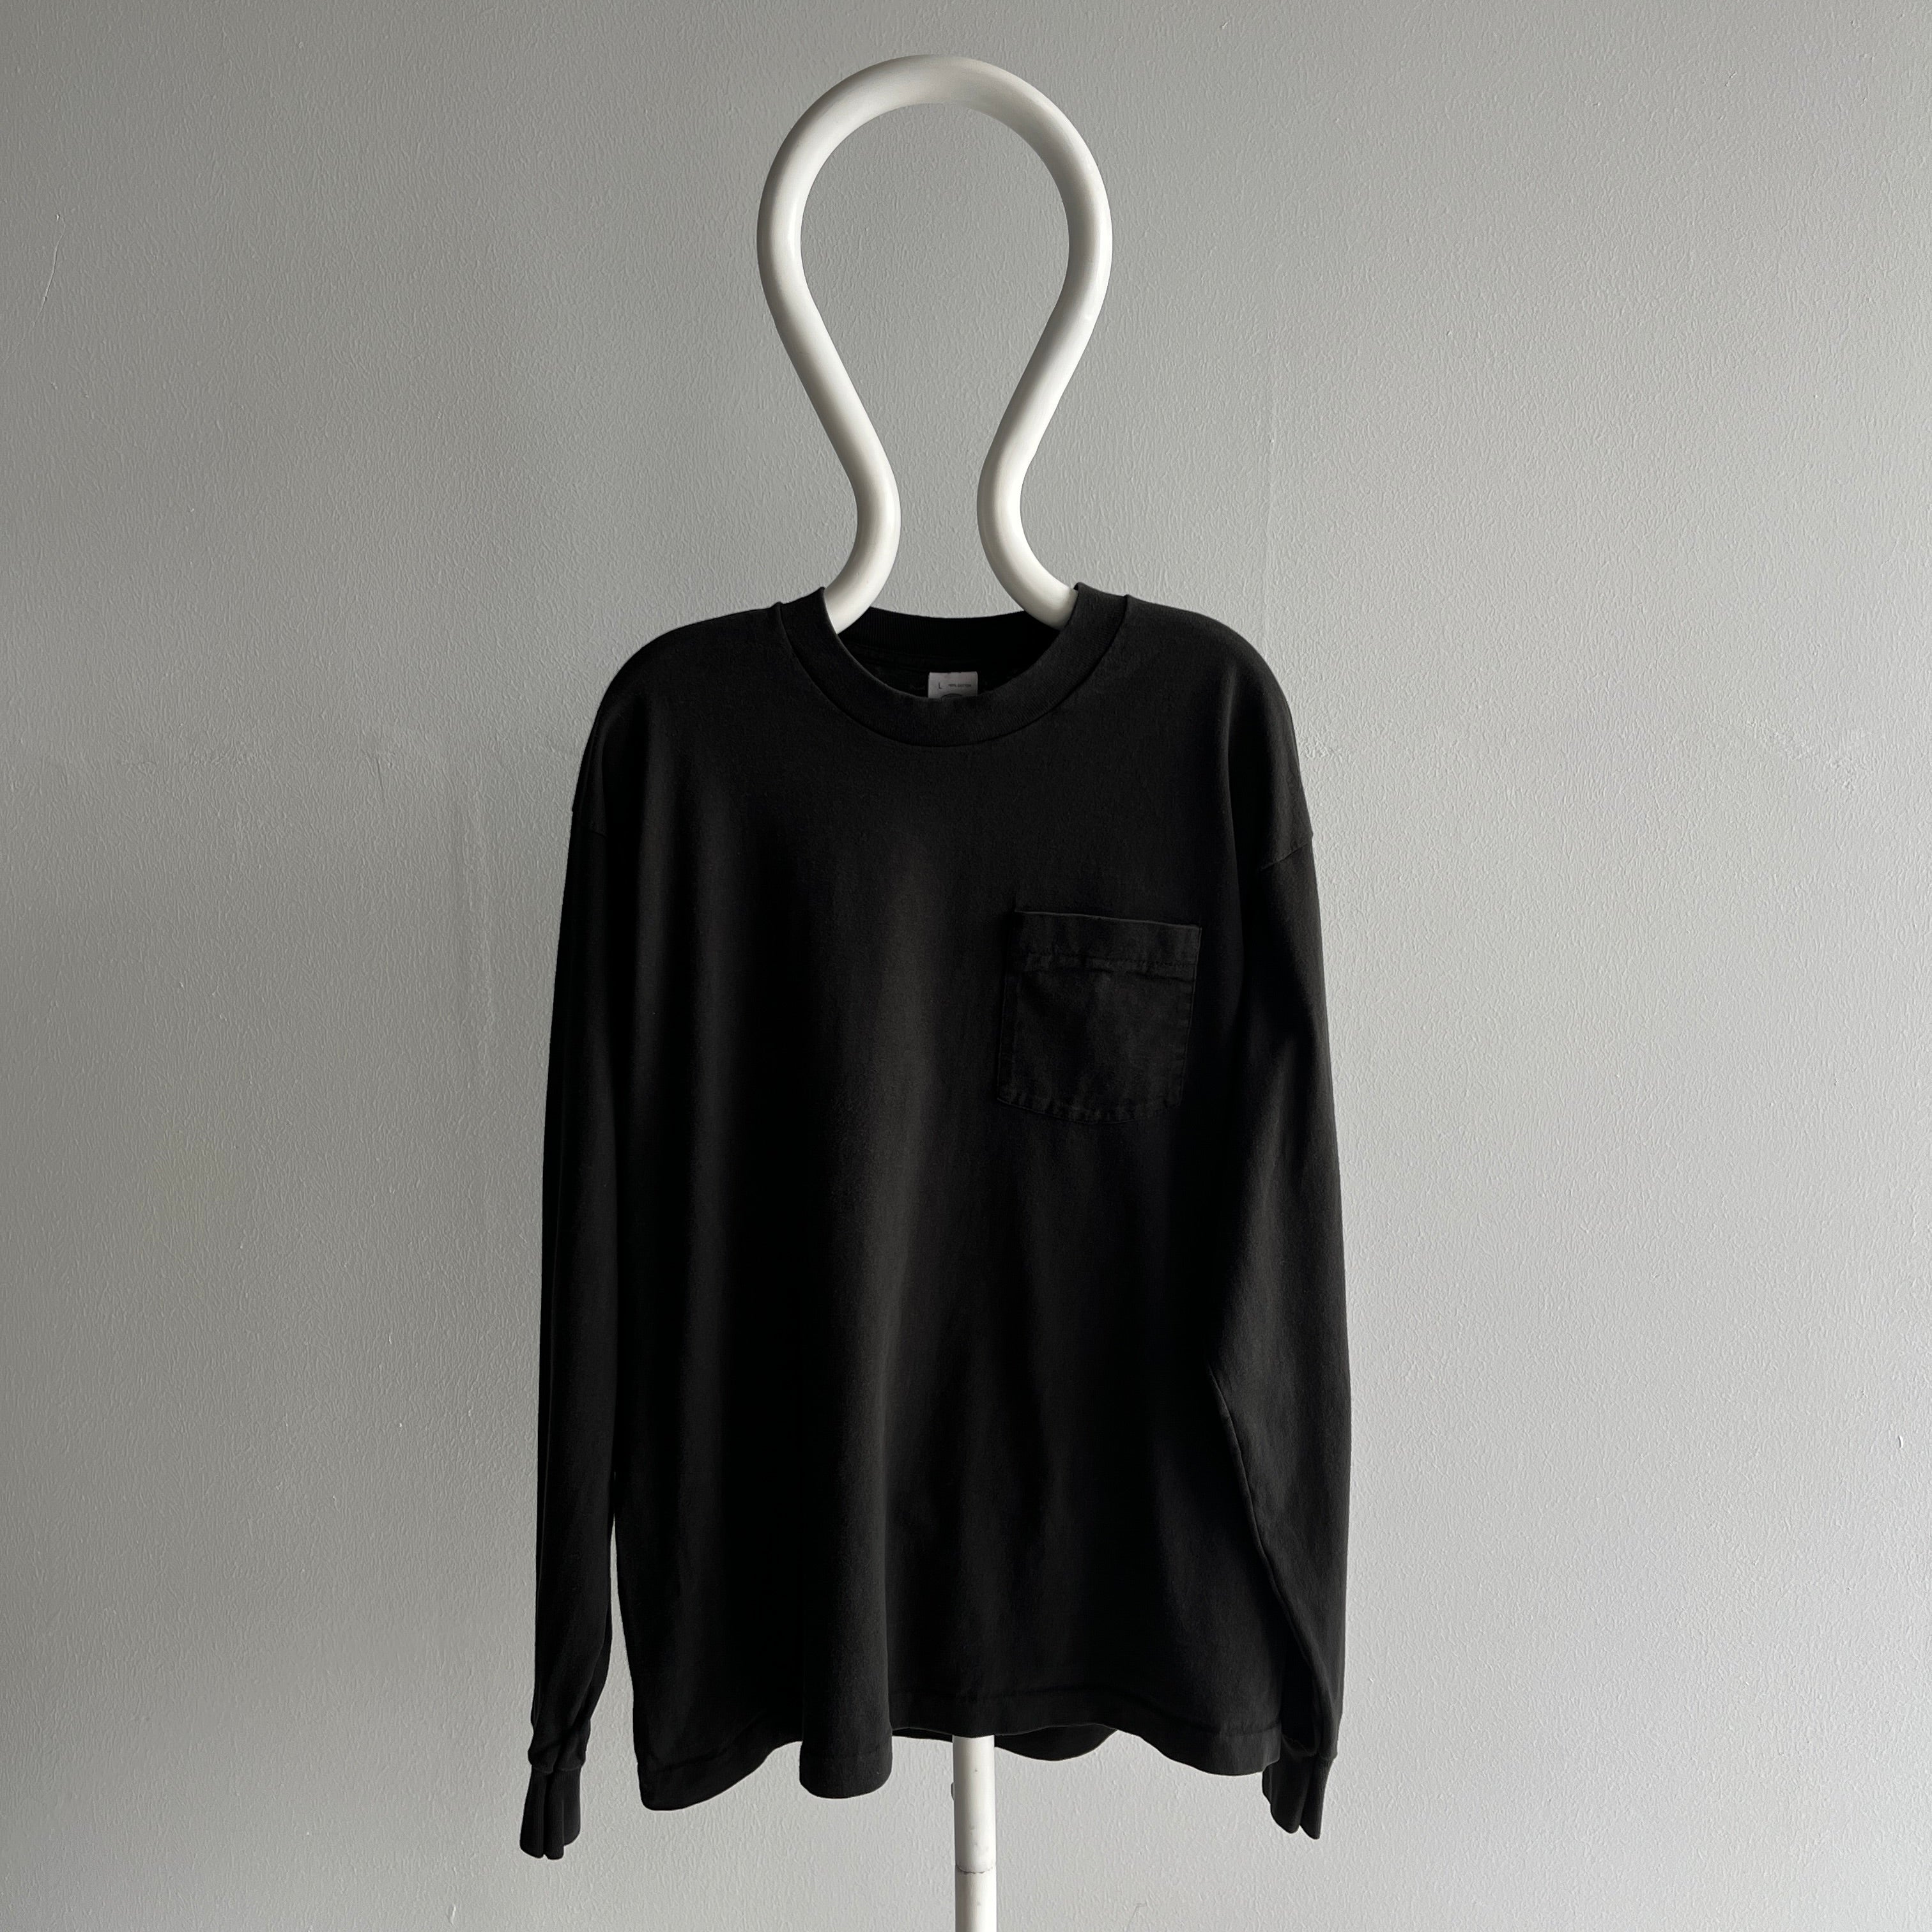 1990s Blank Black Long Sleeve Pocket T-Shirt